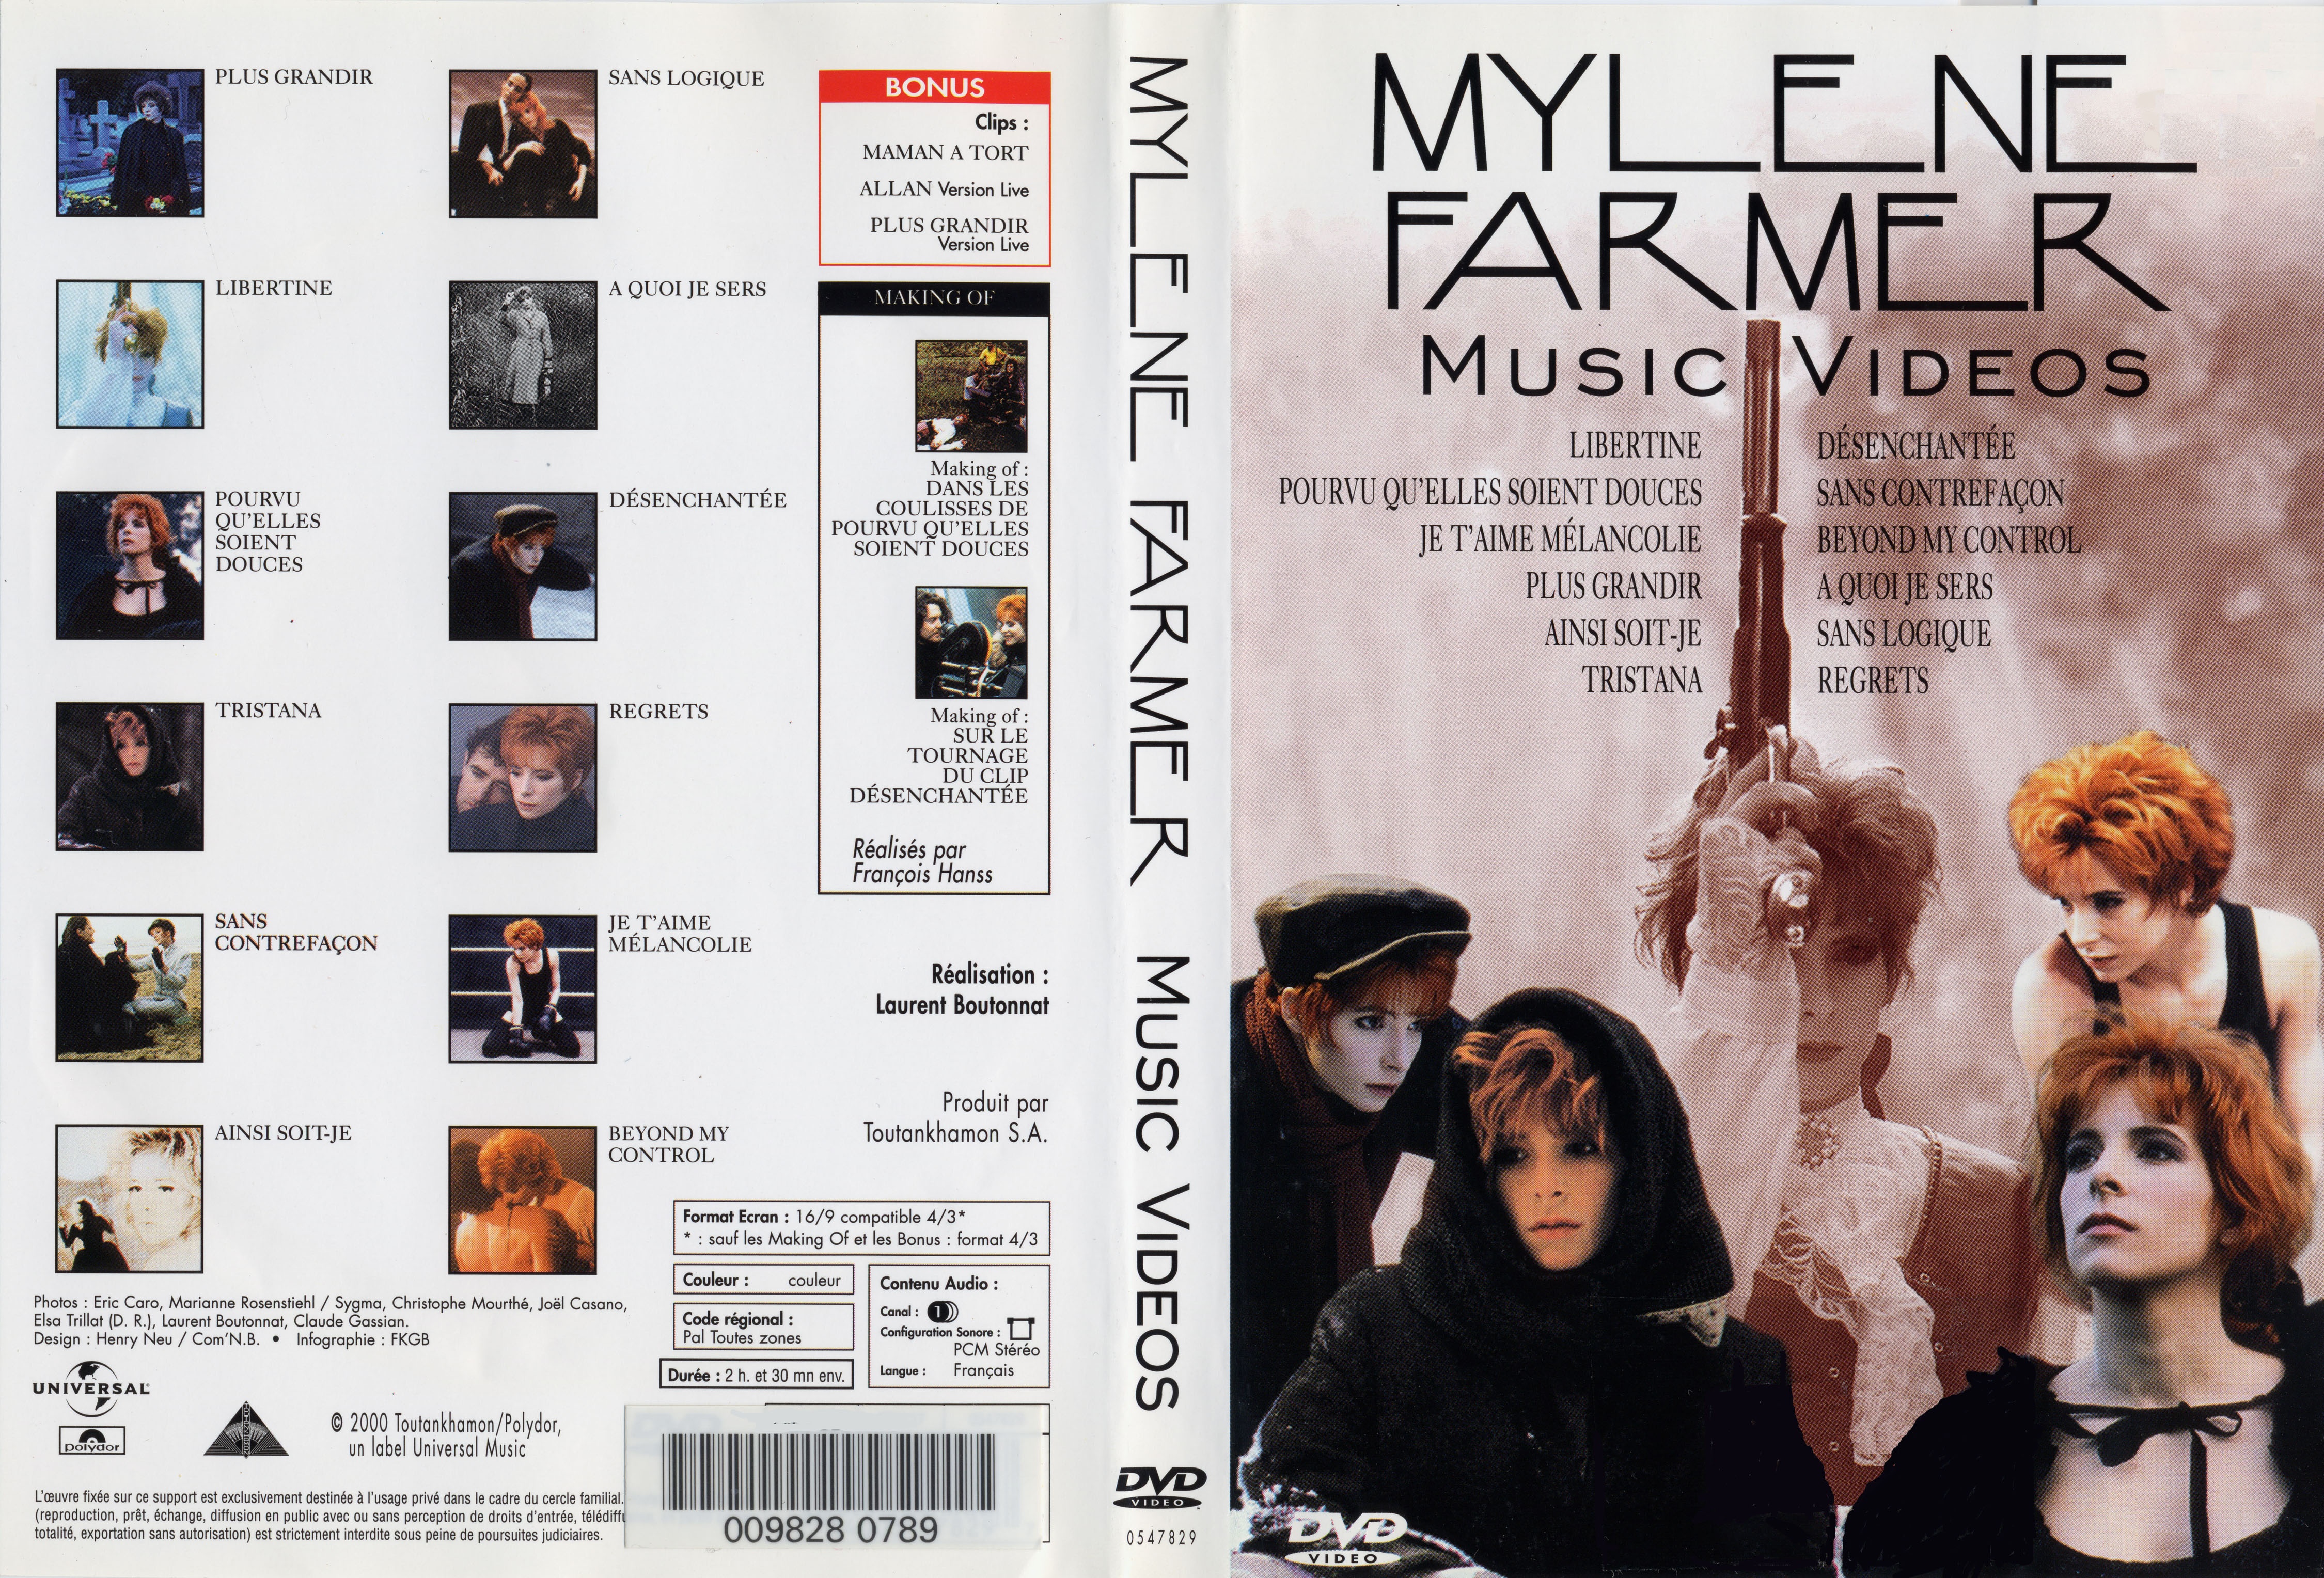 Mylene Farmer music video. 